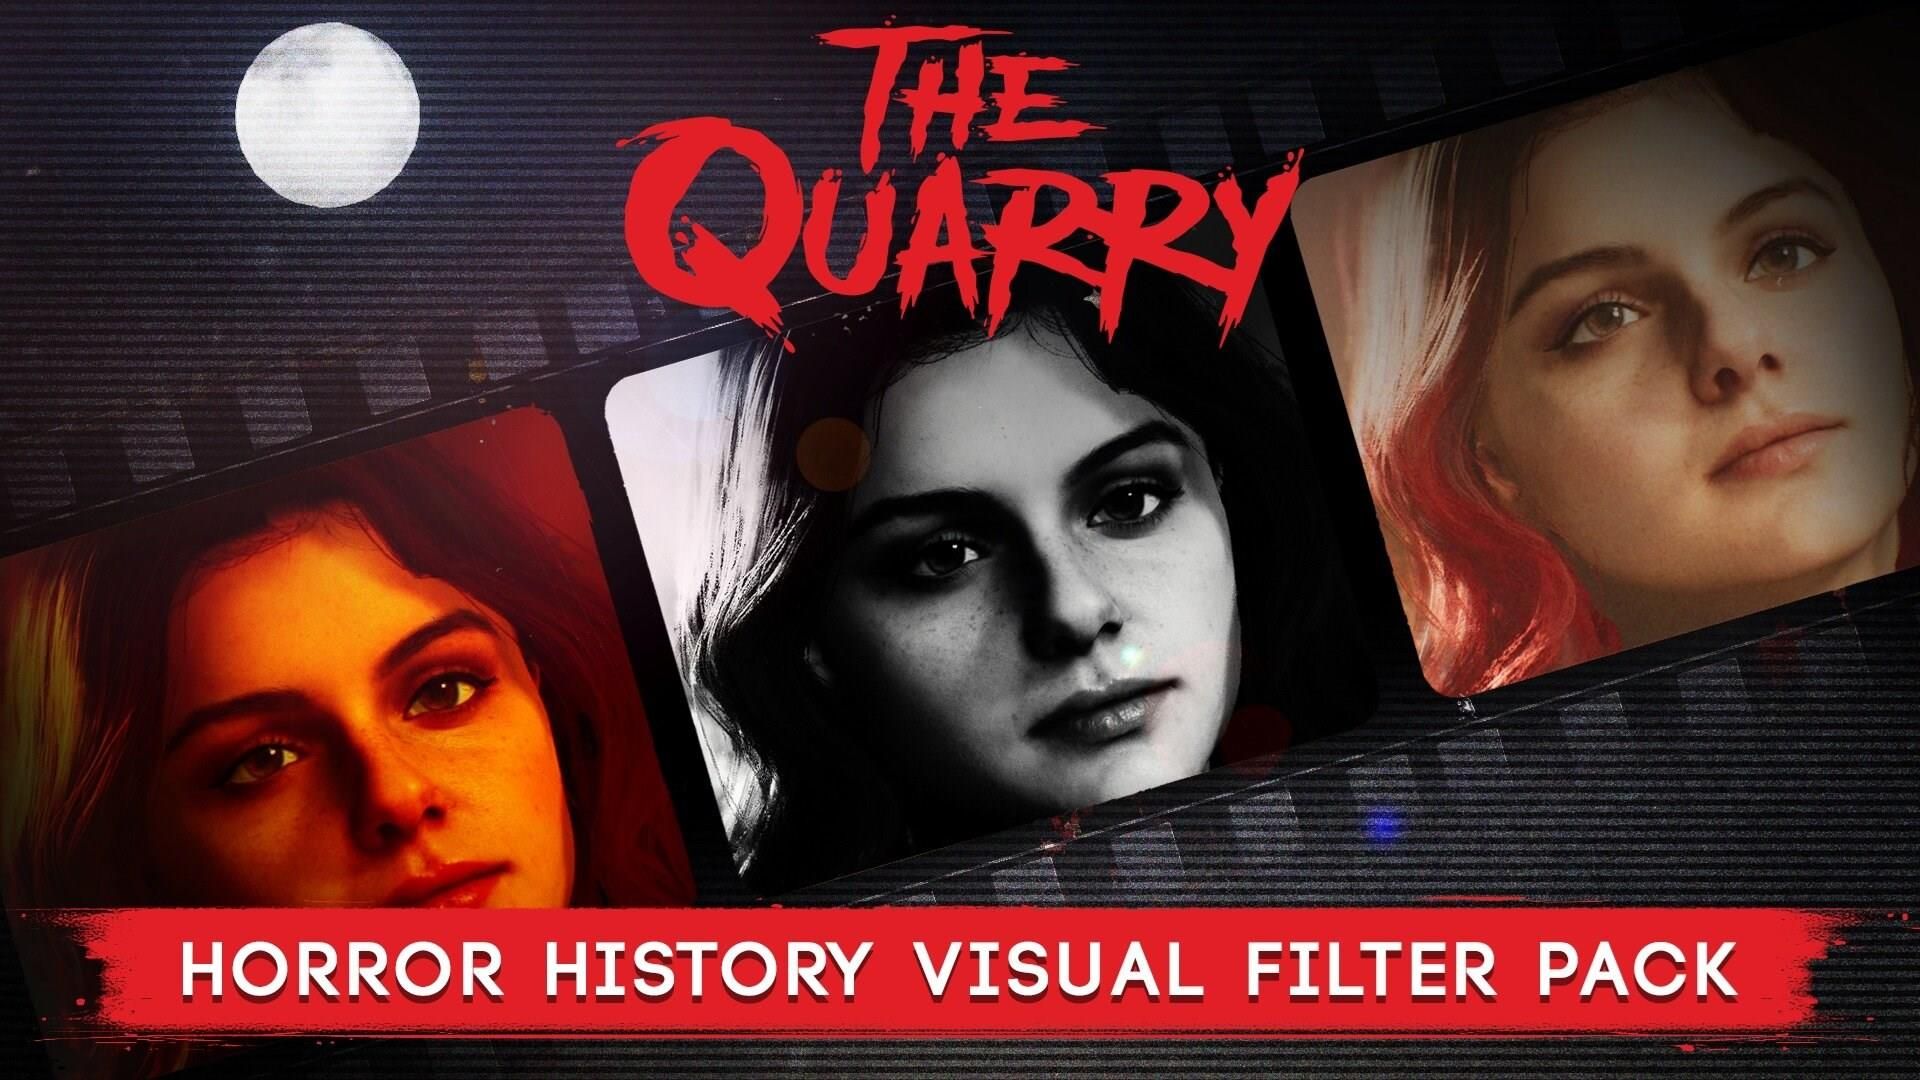 The Quarry (Gra Xbox Series X)